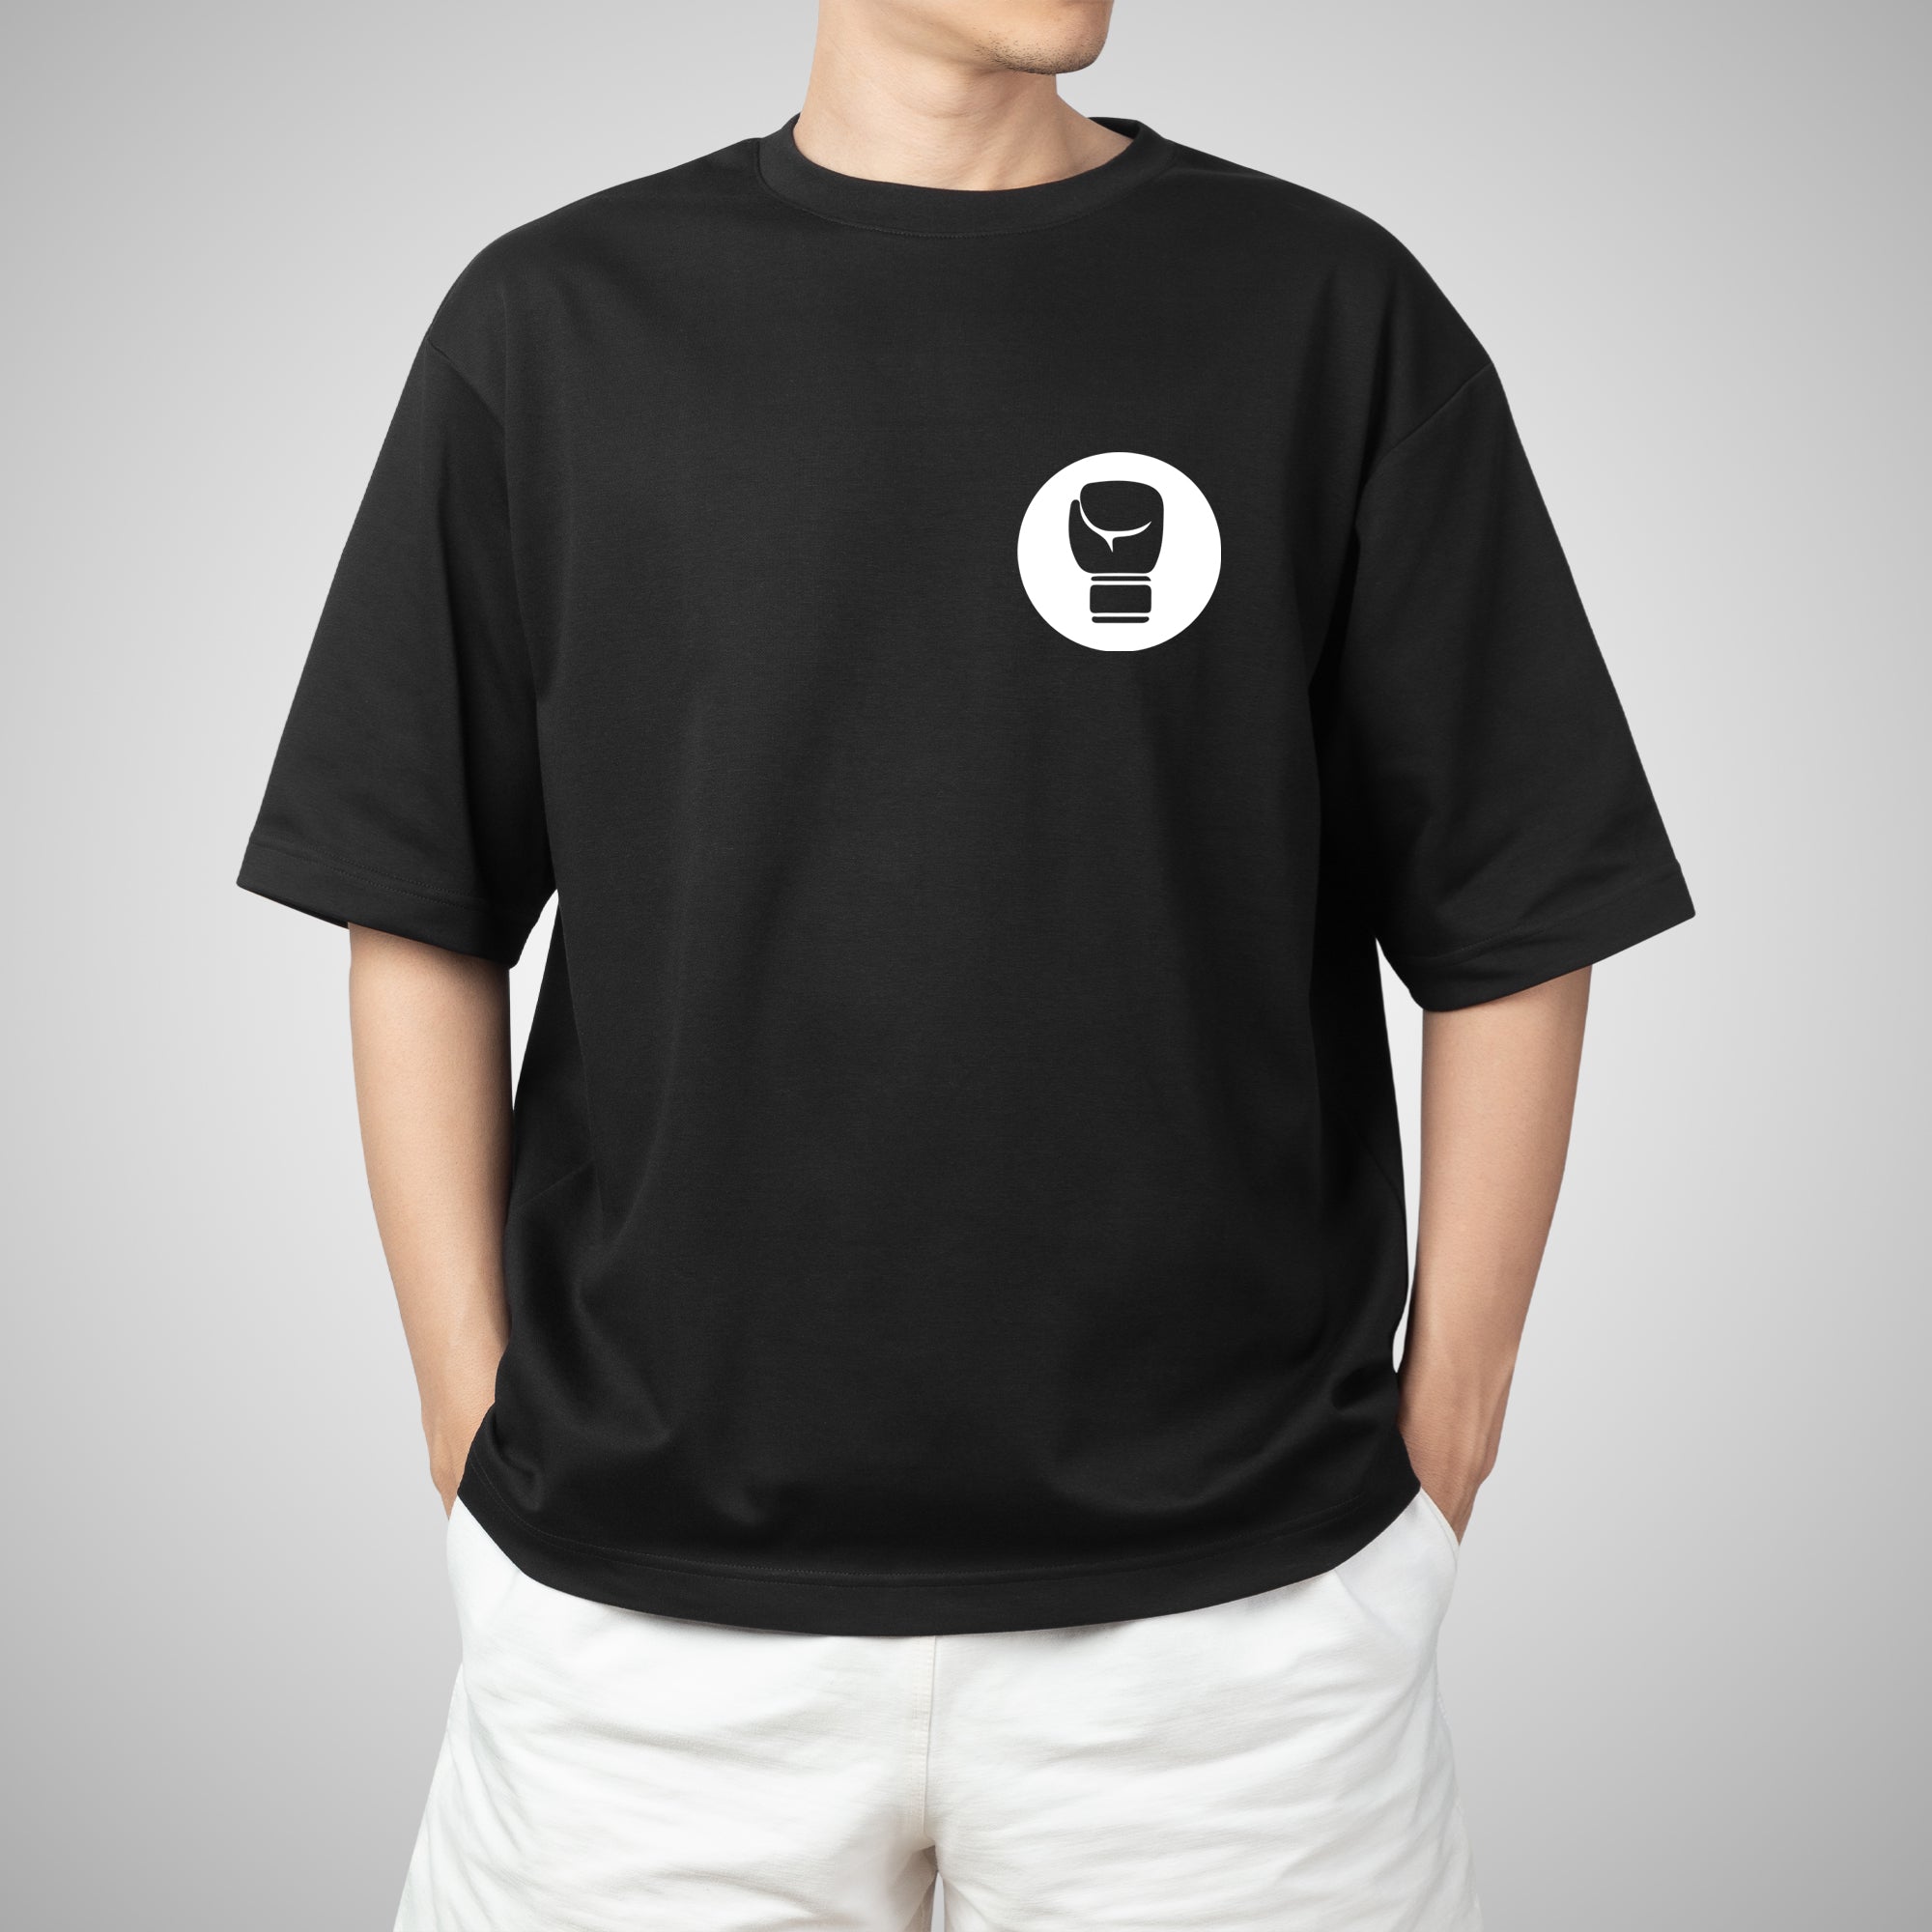 Camisa Hajime no Ippo Personagens - Camisas Hajime no Ippo Estampa Total